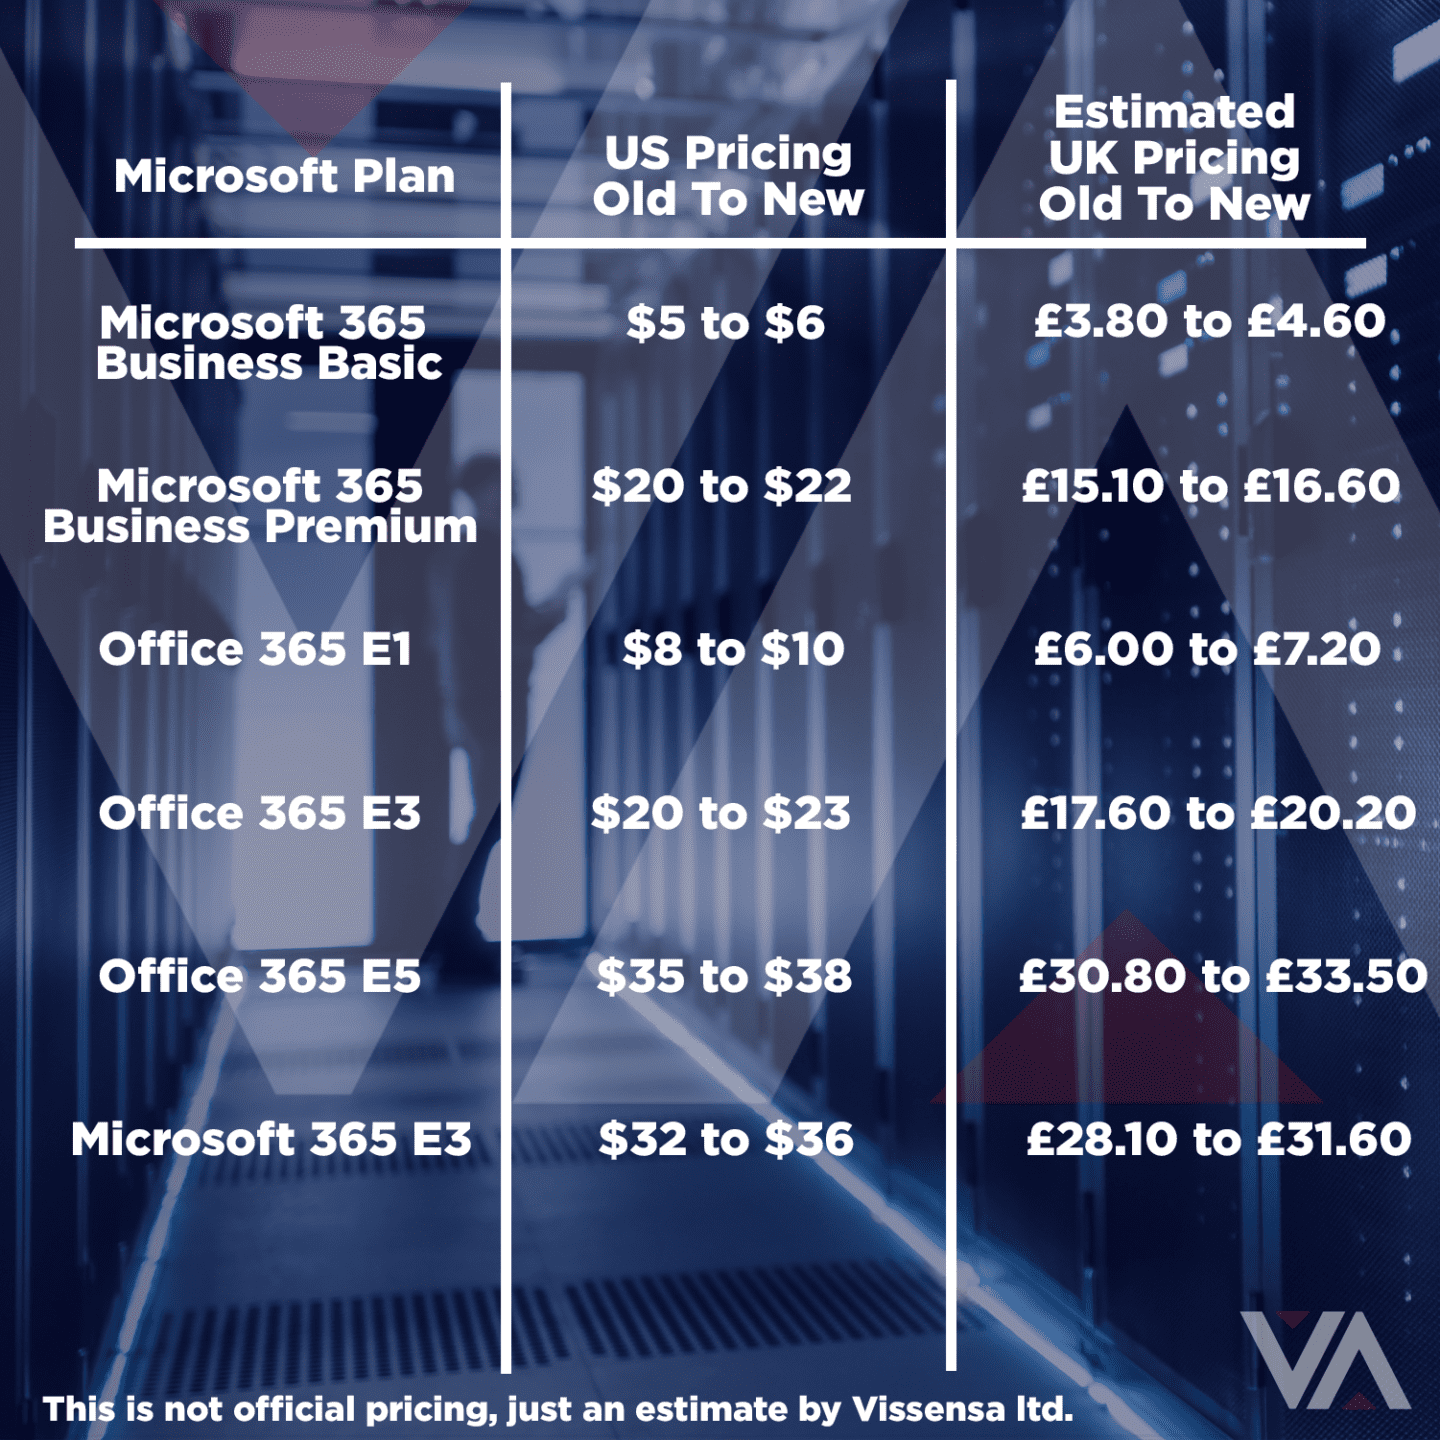 Microsoft 365 Price Changes